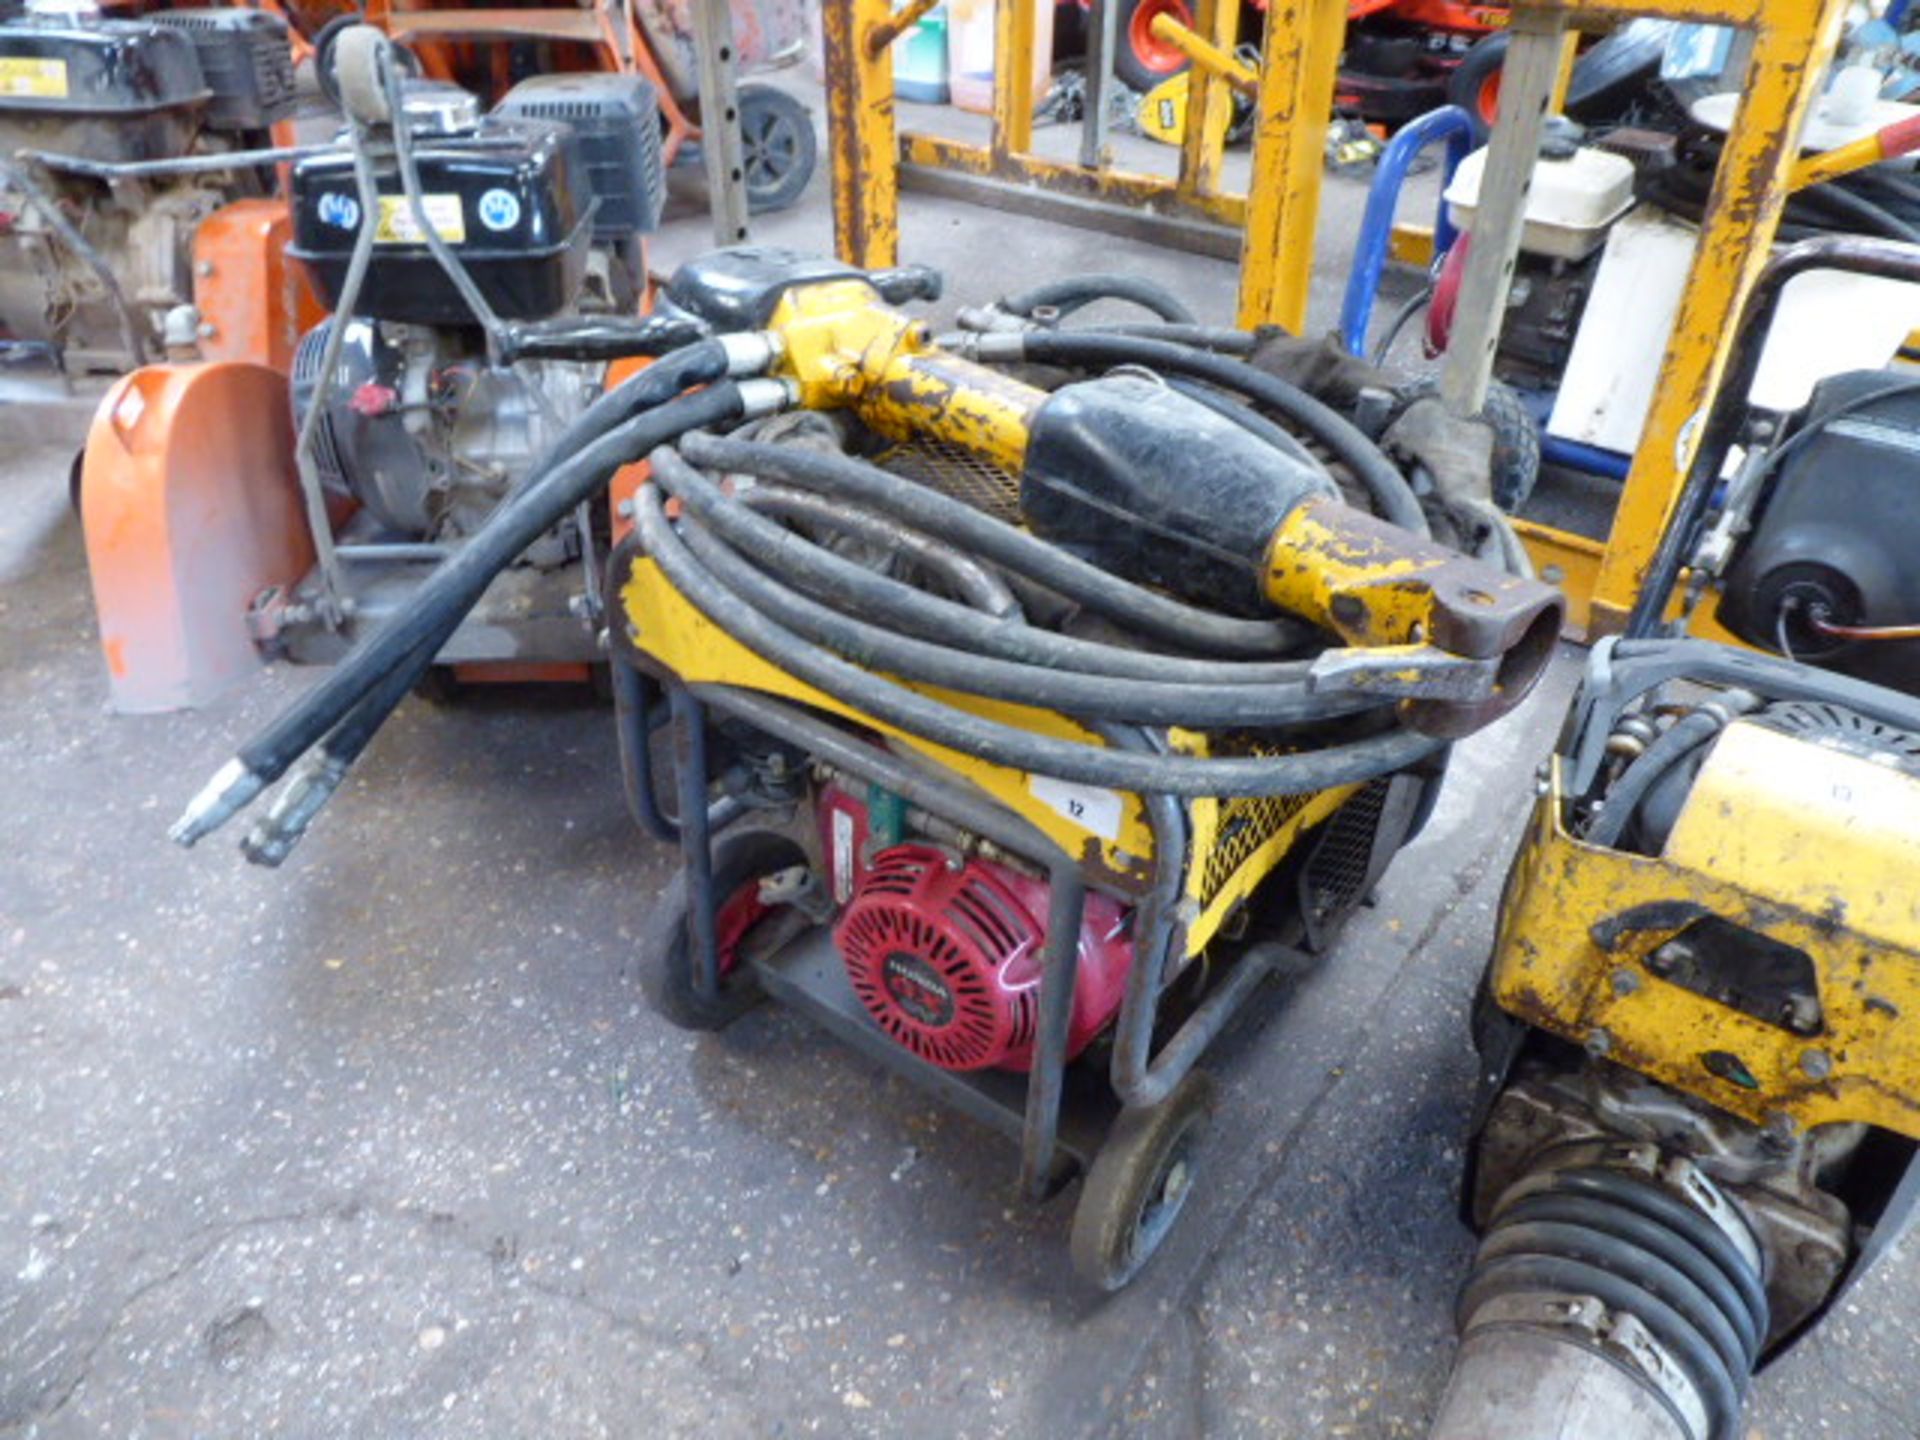 JCB petrol engine hydraulic breaker unit with hose and breaker (E319951)